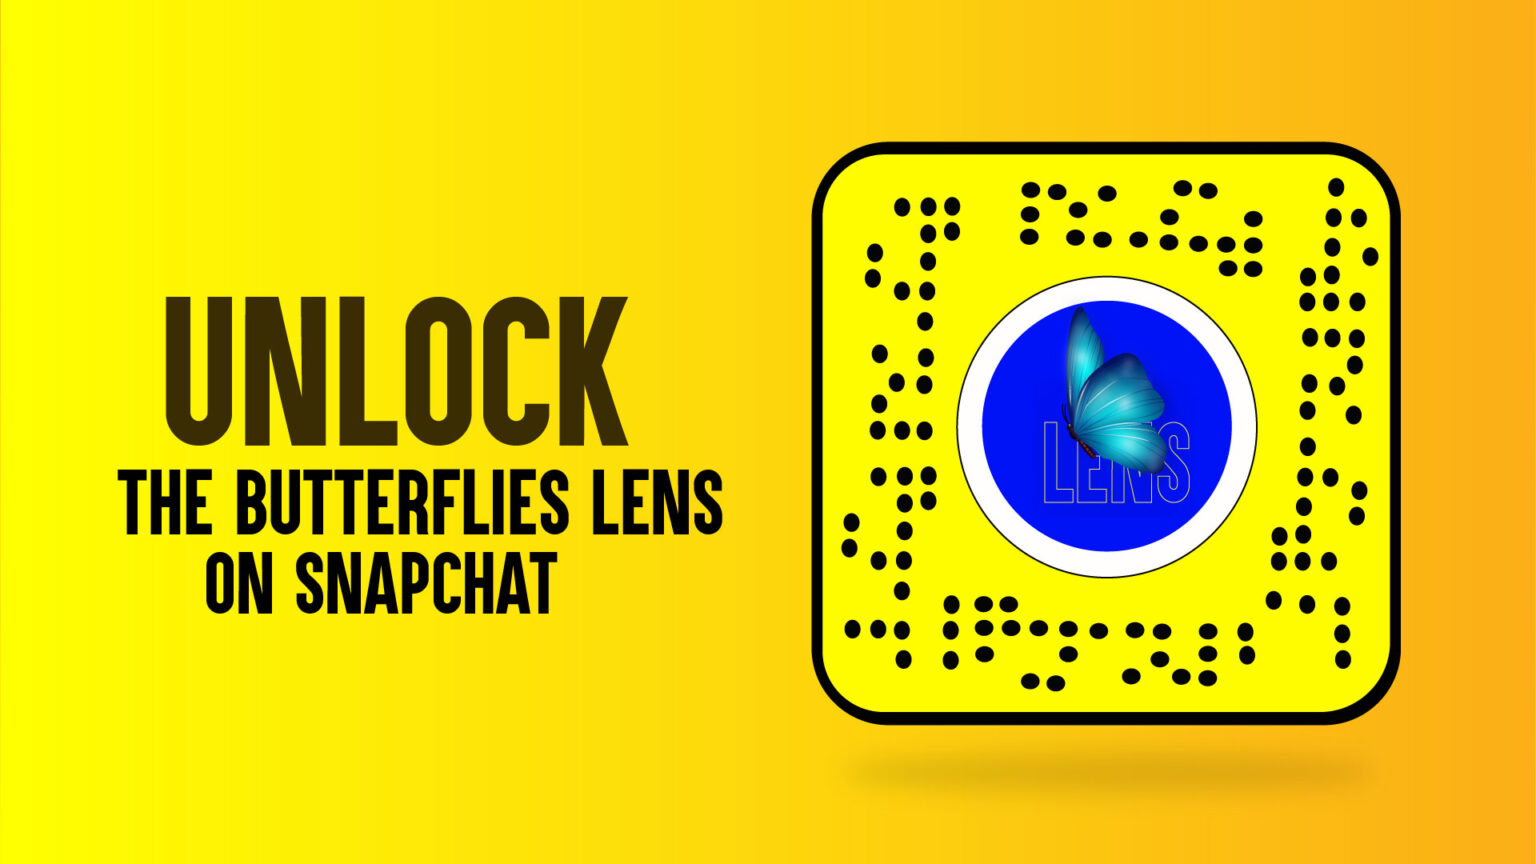 Unlock The Butterflies lens on Snapchat